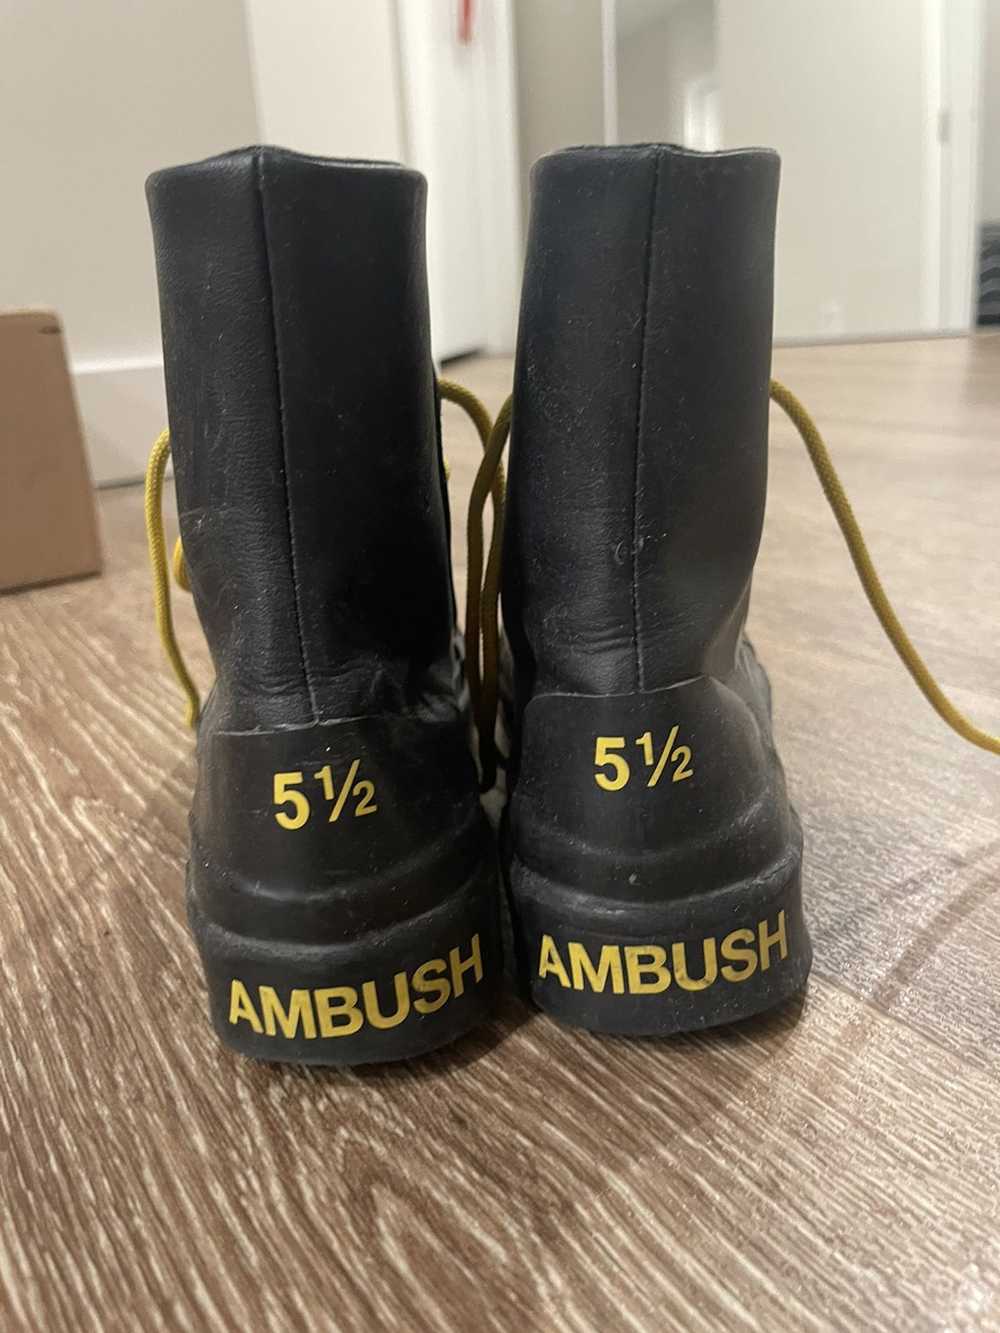 Ambush Design Ambush x Converse Pro Leather - image 3